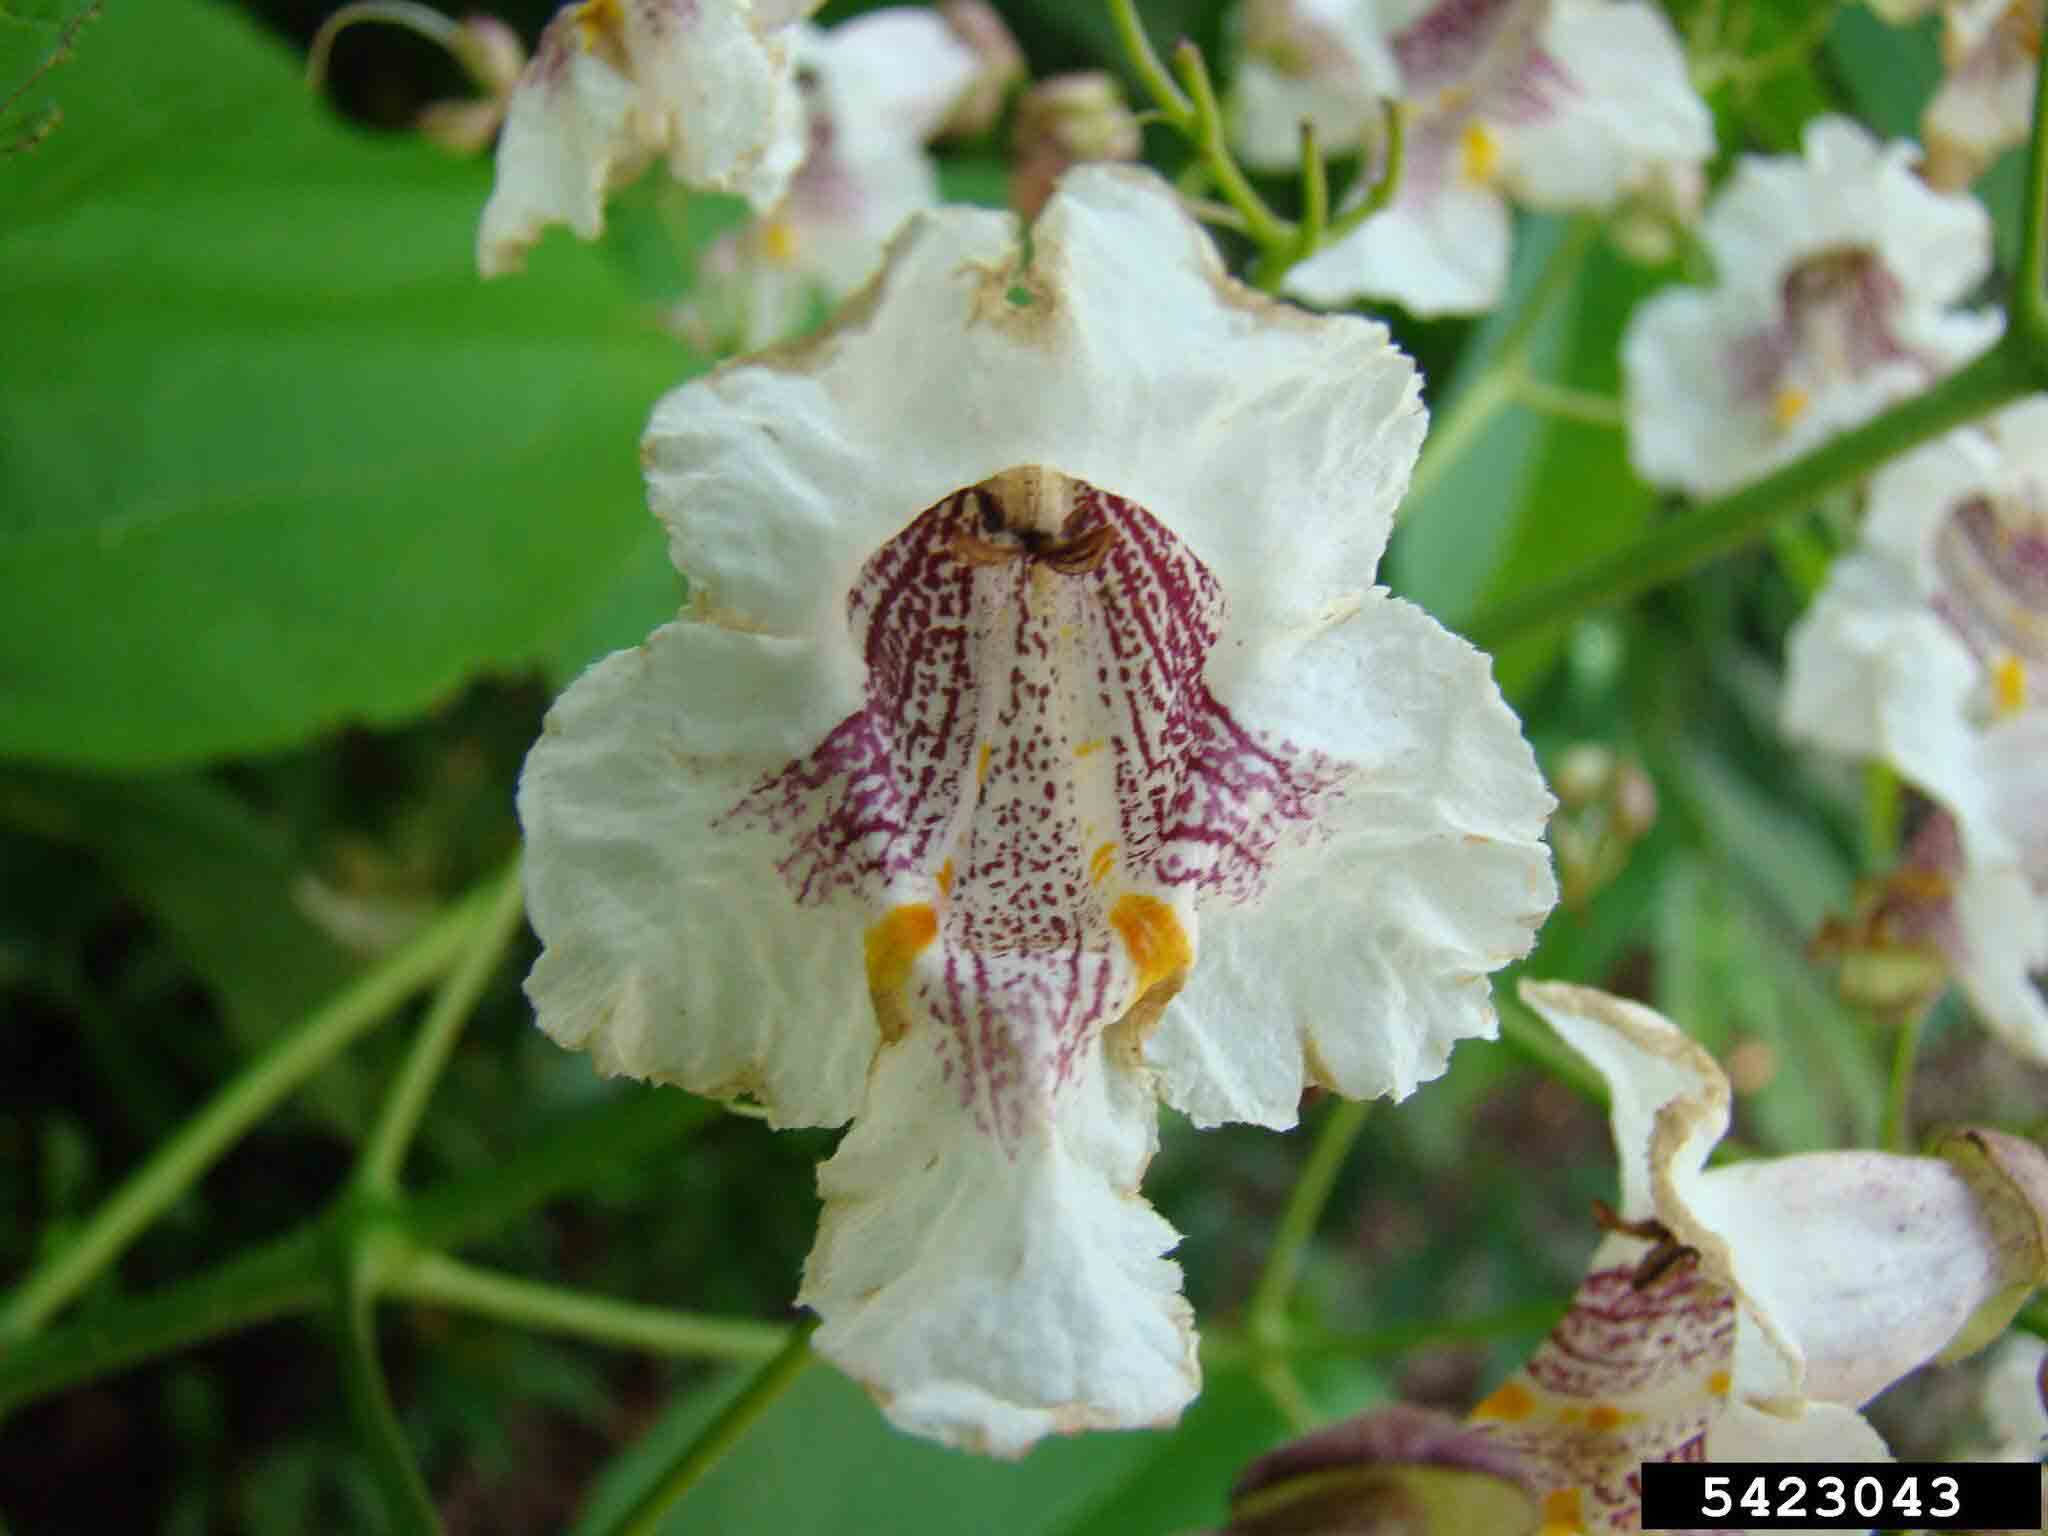 Southern catalpa flower